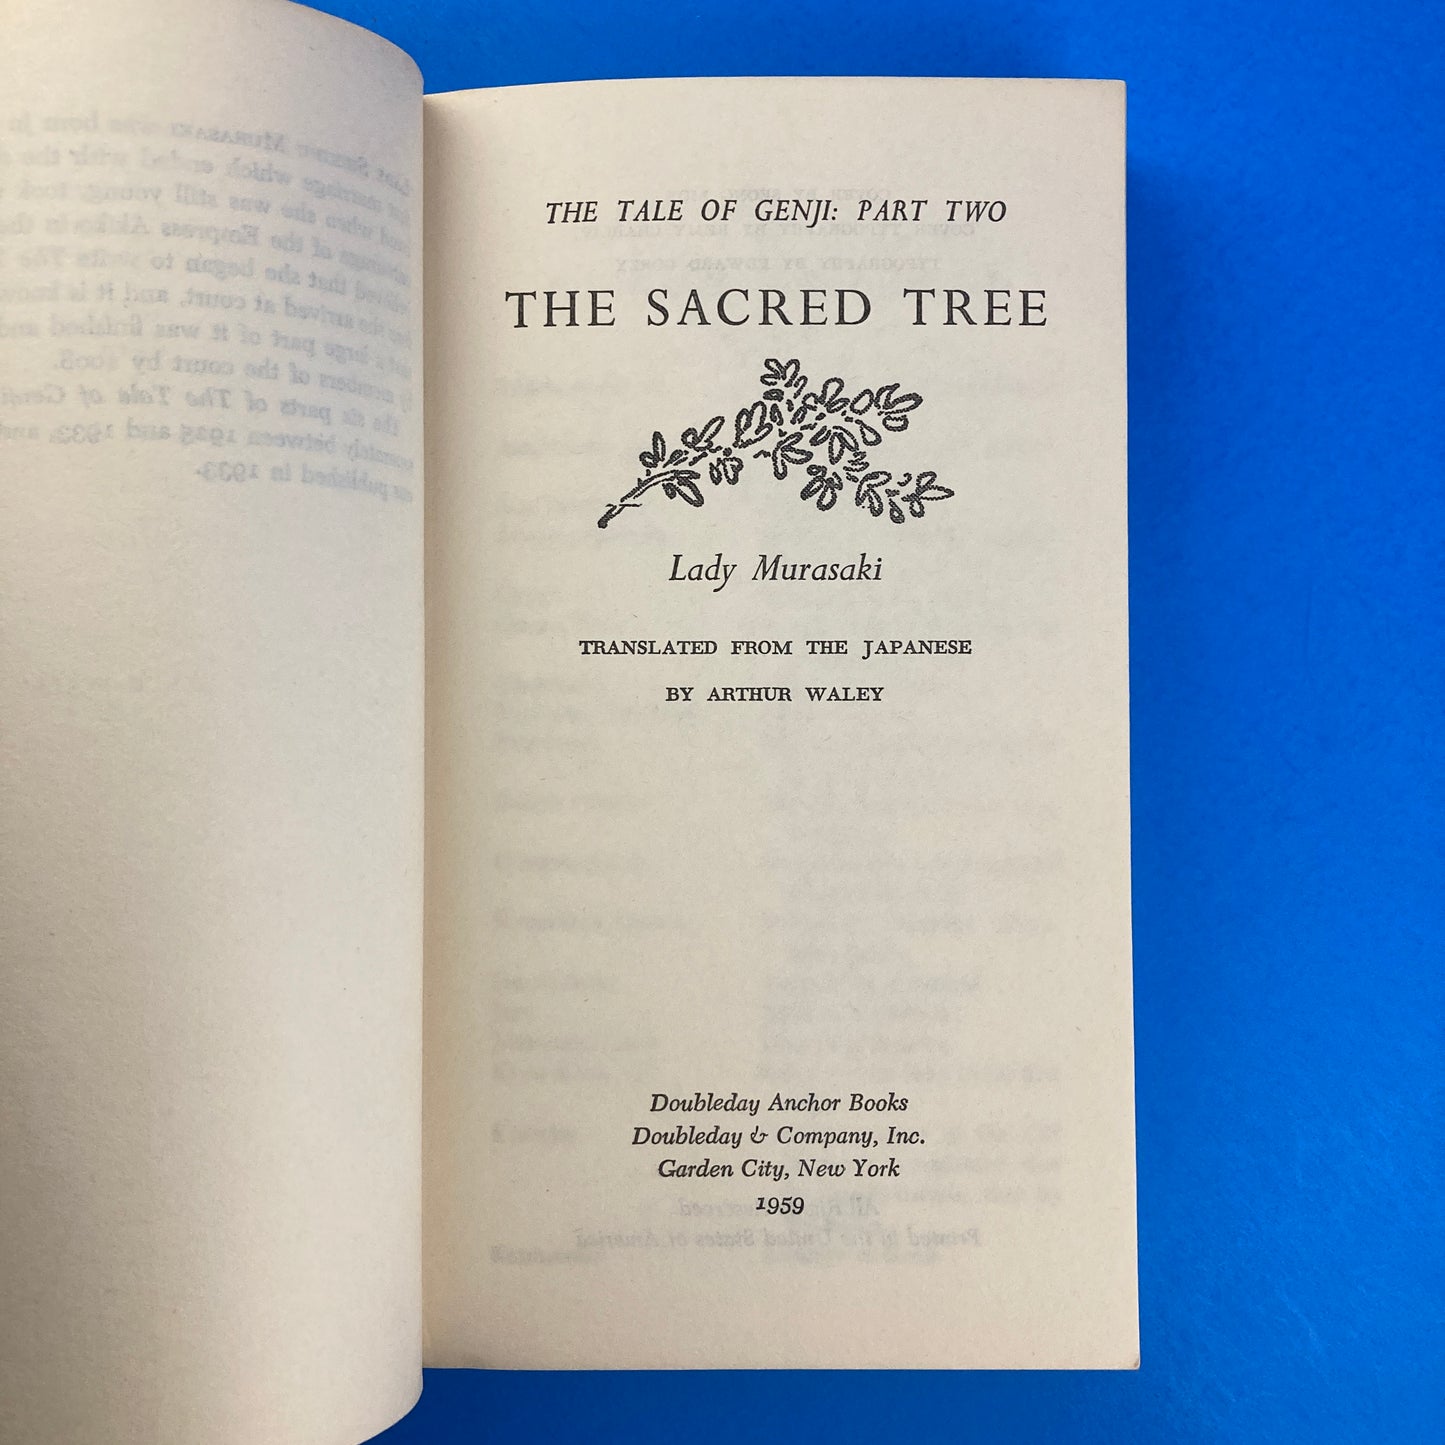 The Tale of Genji, Part II: The Sacred Tree